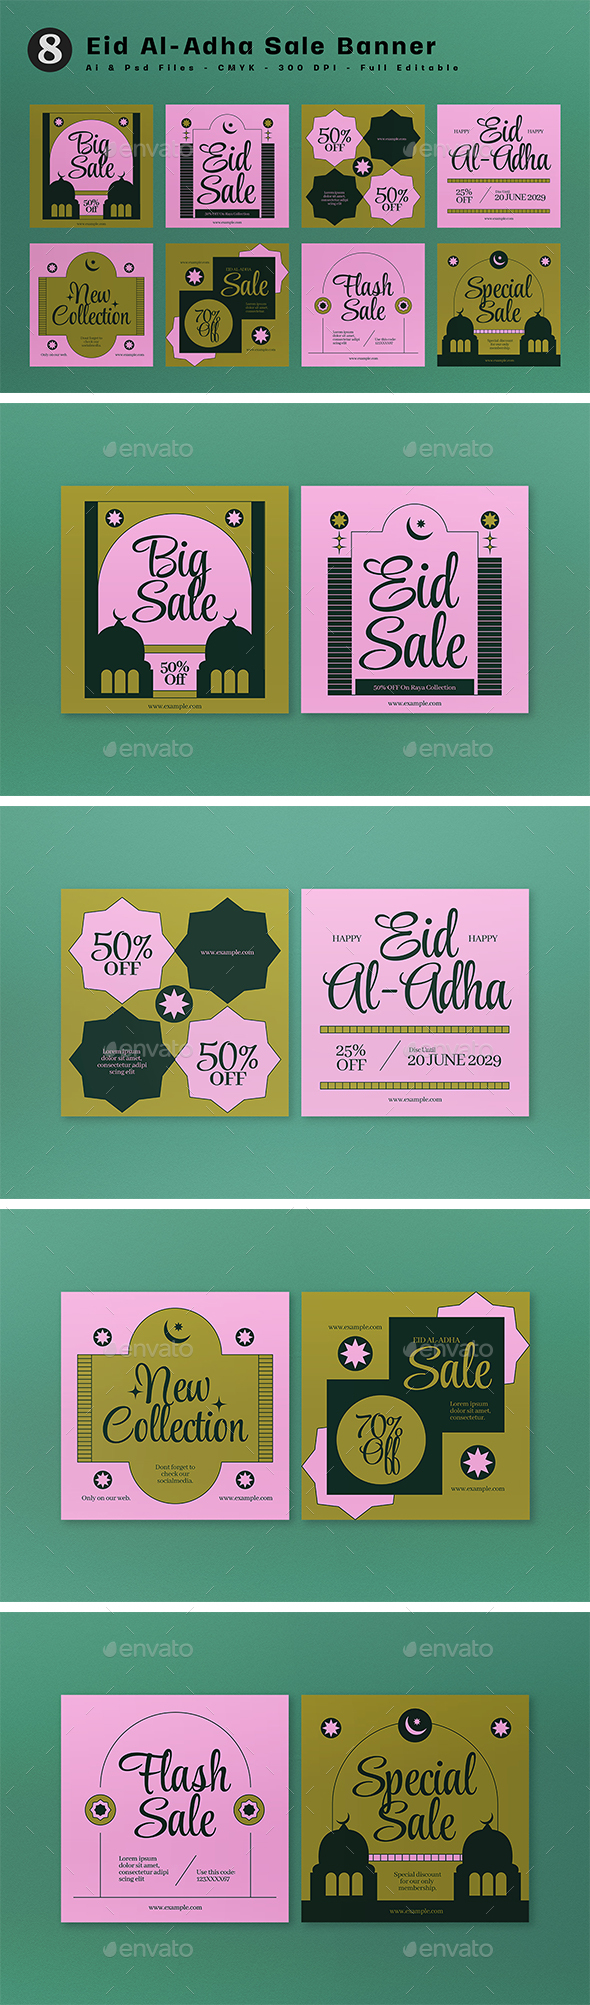 [DOWNLOAD]Green Flat Design Eid Al Adha Sale Banner